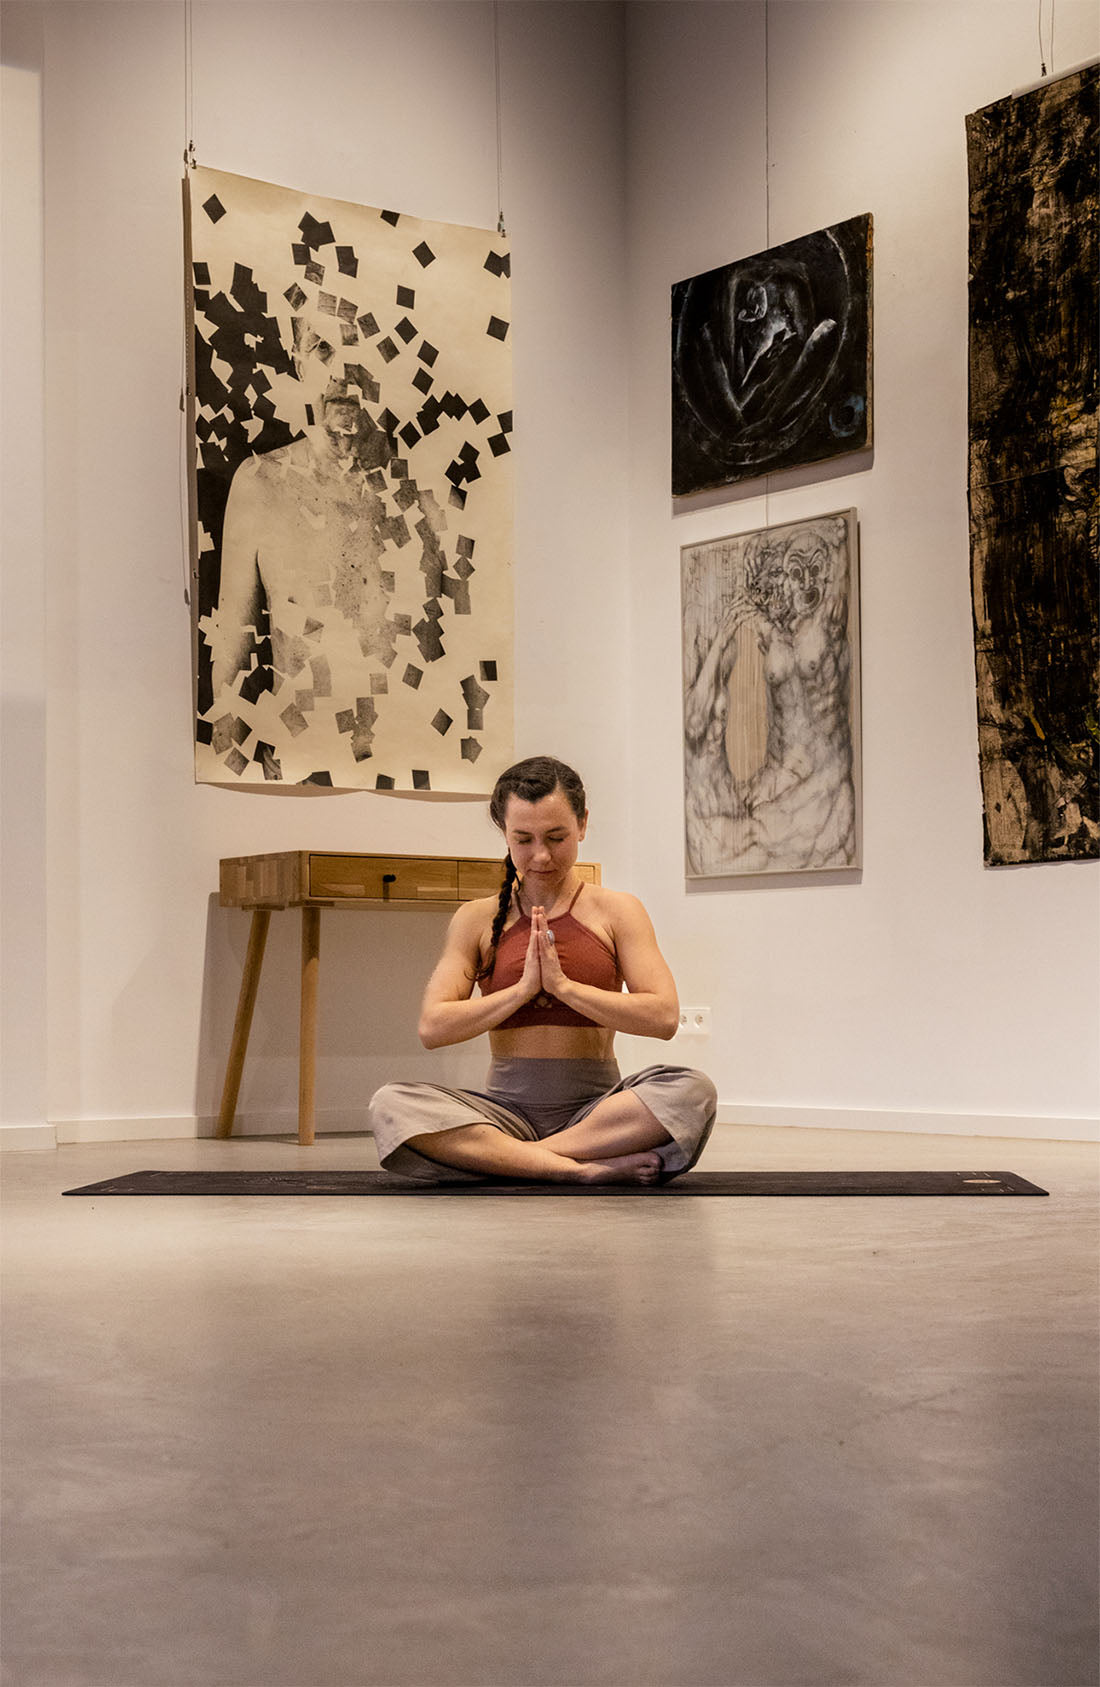 Yogi.na - a yoga teacher who created aesthetics worth imitating.